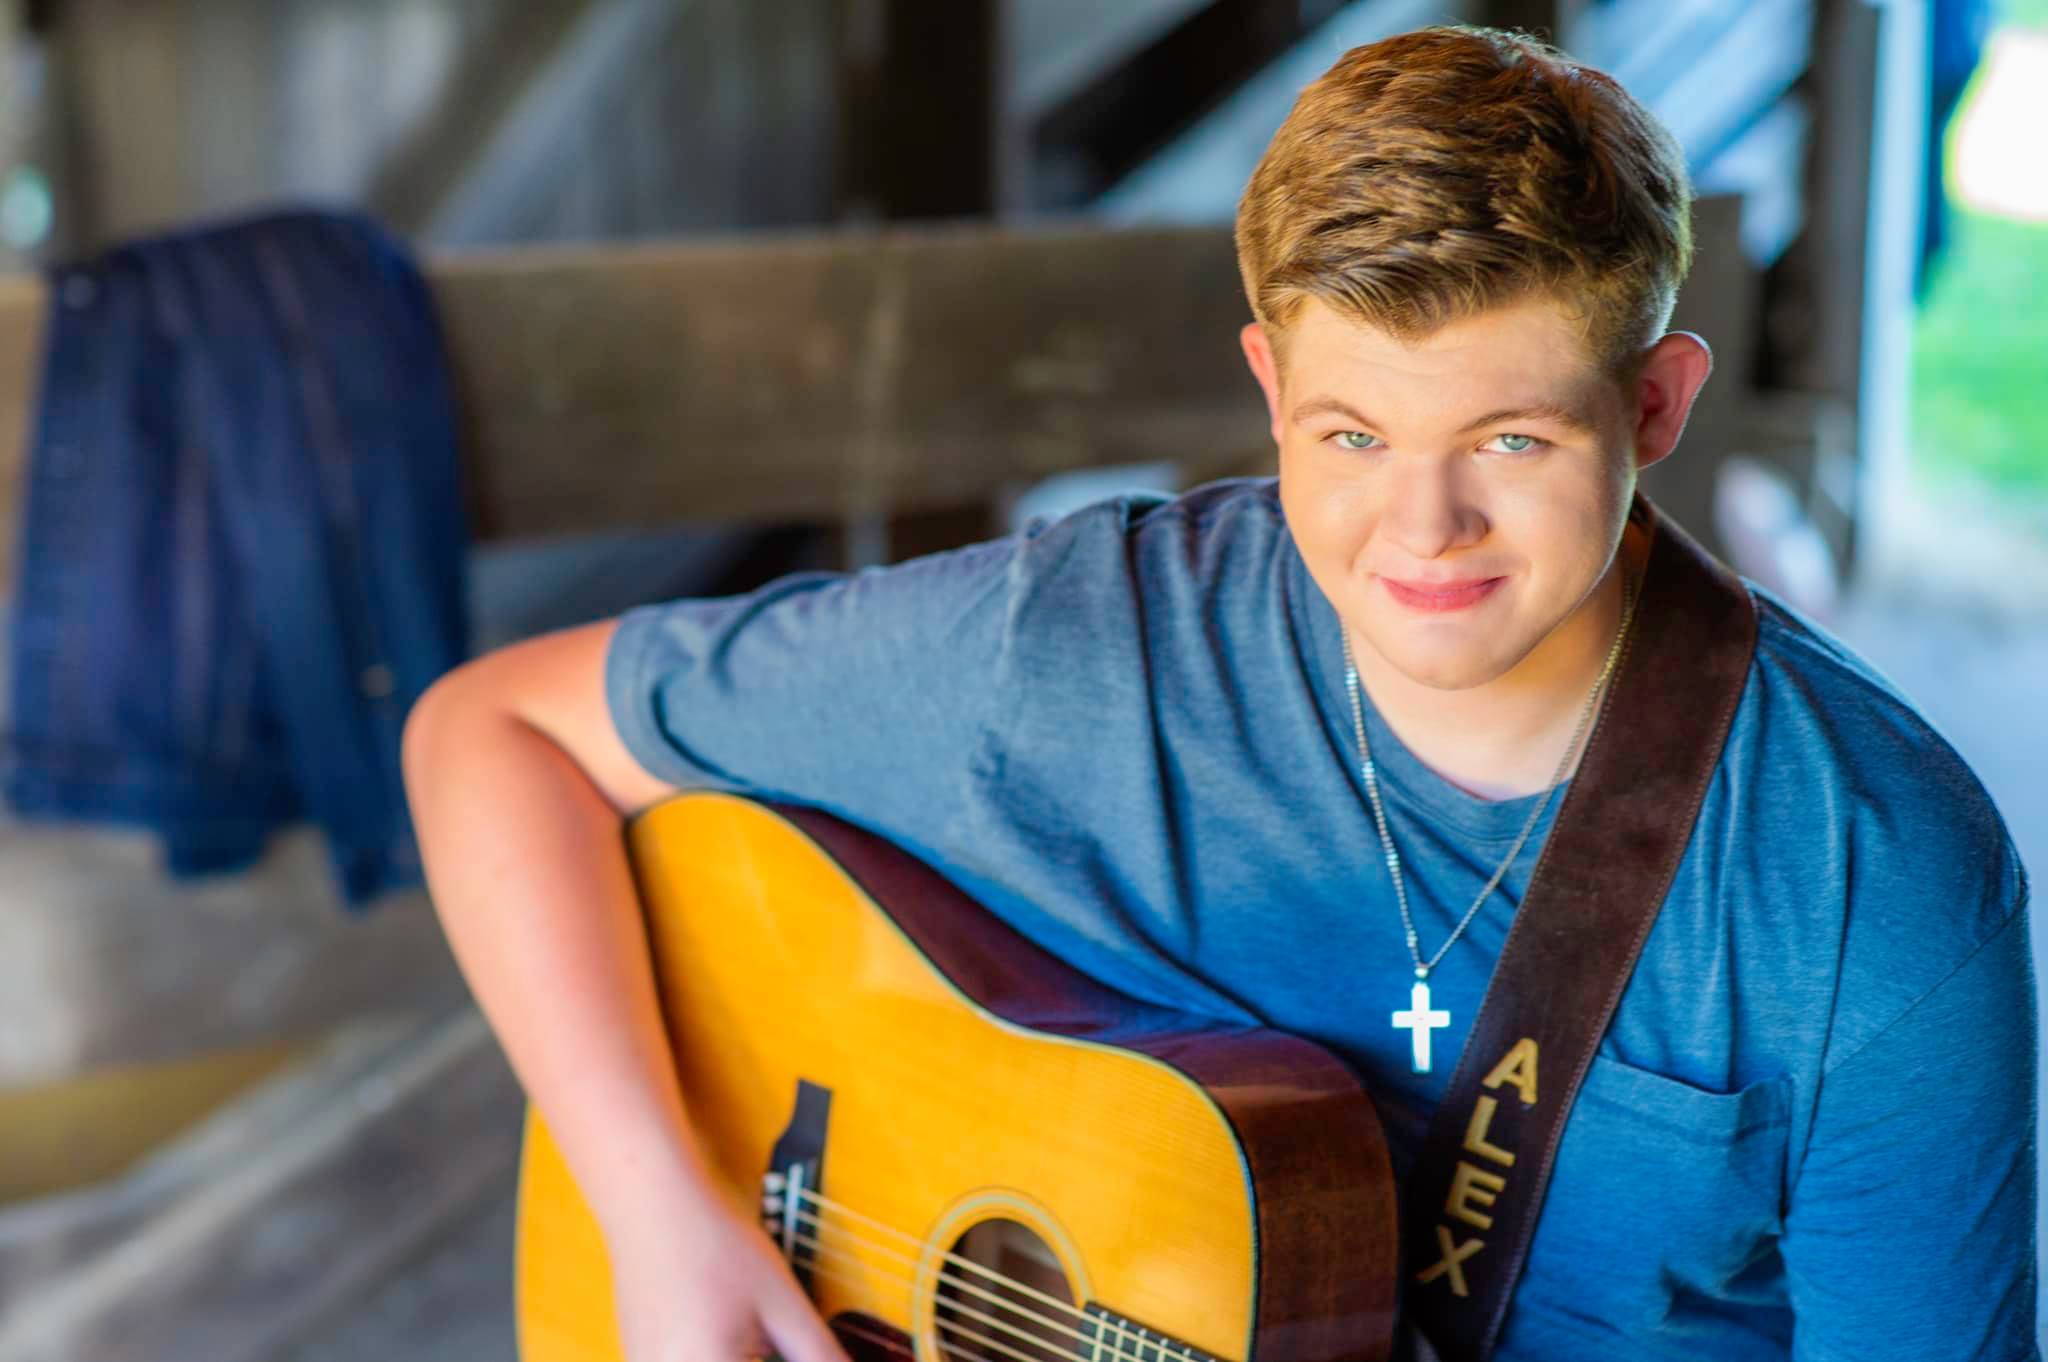 American Idol's Alex Miller will play the Kentucky State Fair 2021